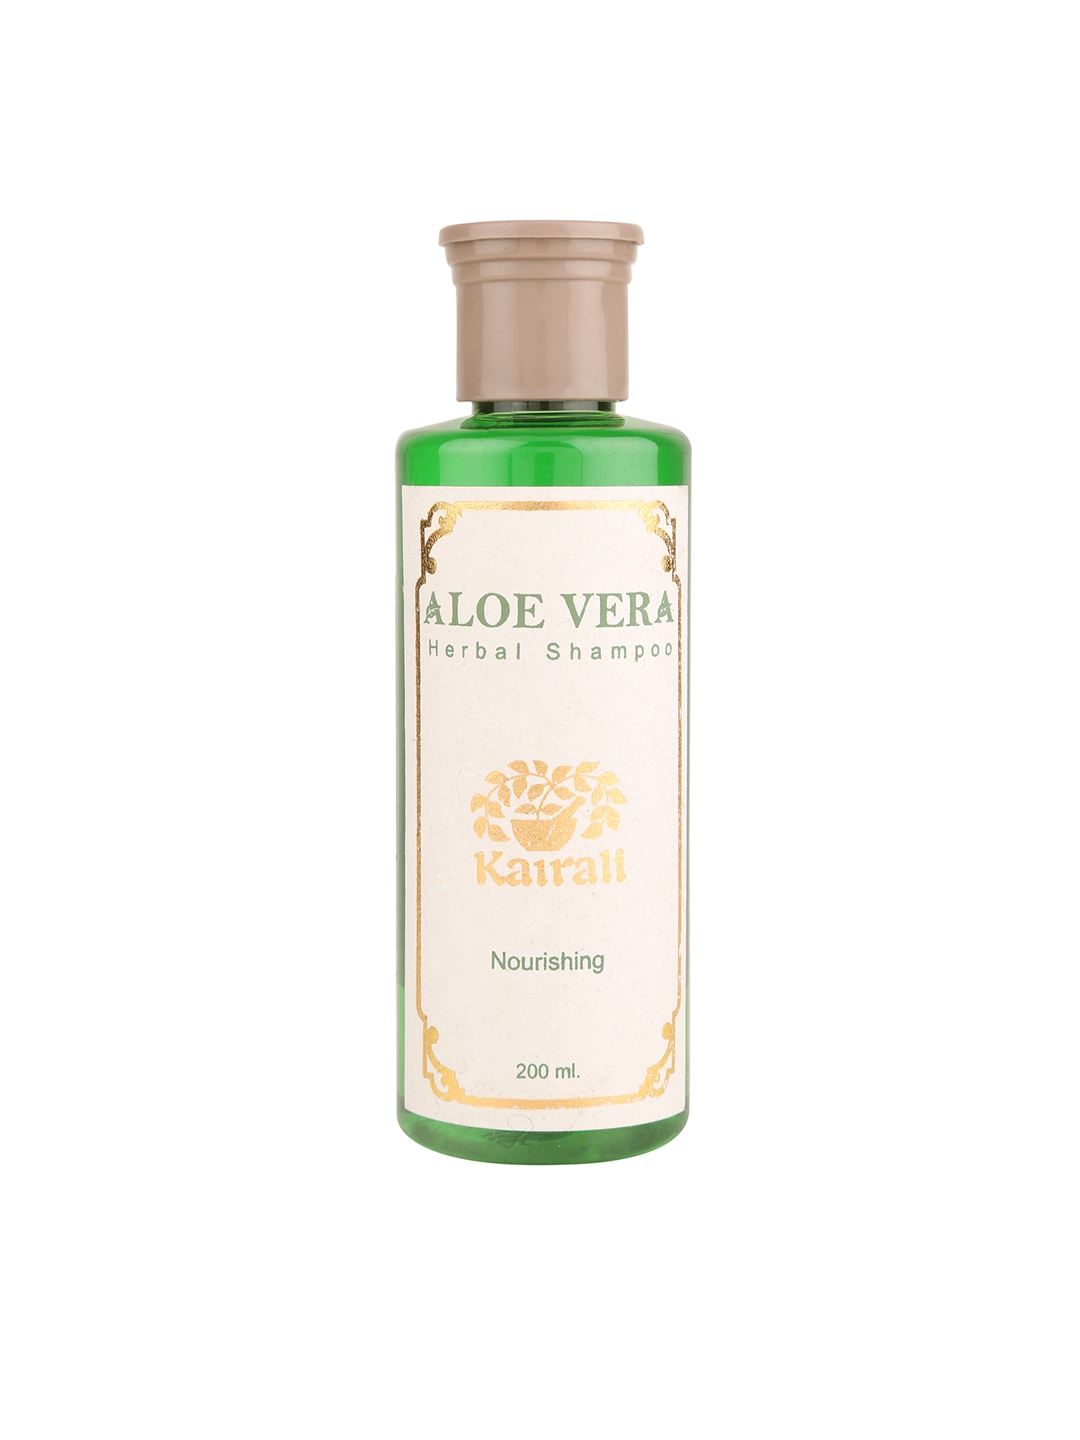 Kairali Aloe Vera Herbal Shampoo 200ml Price in India